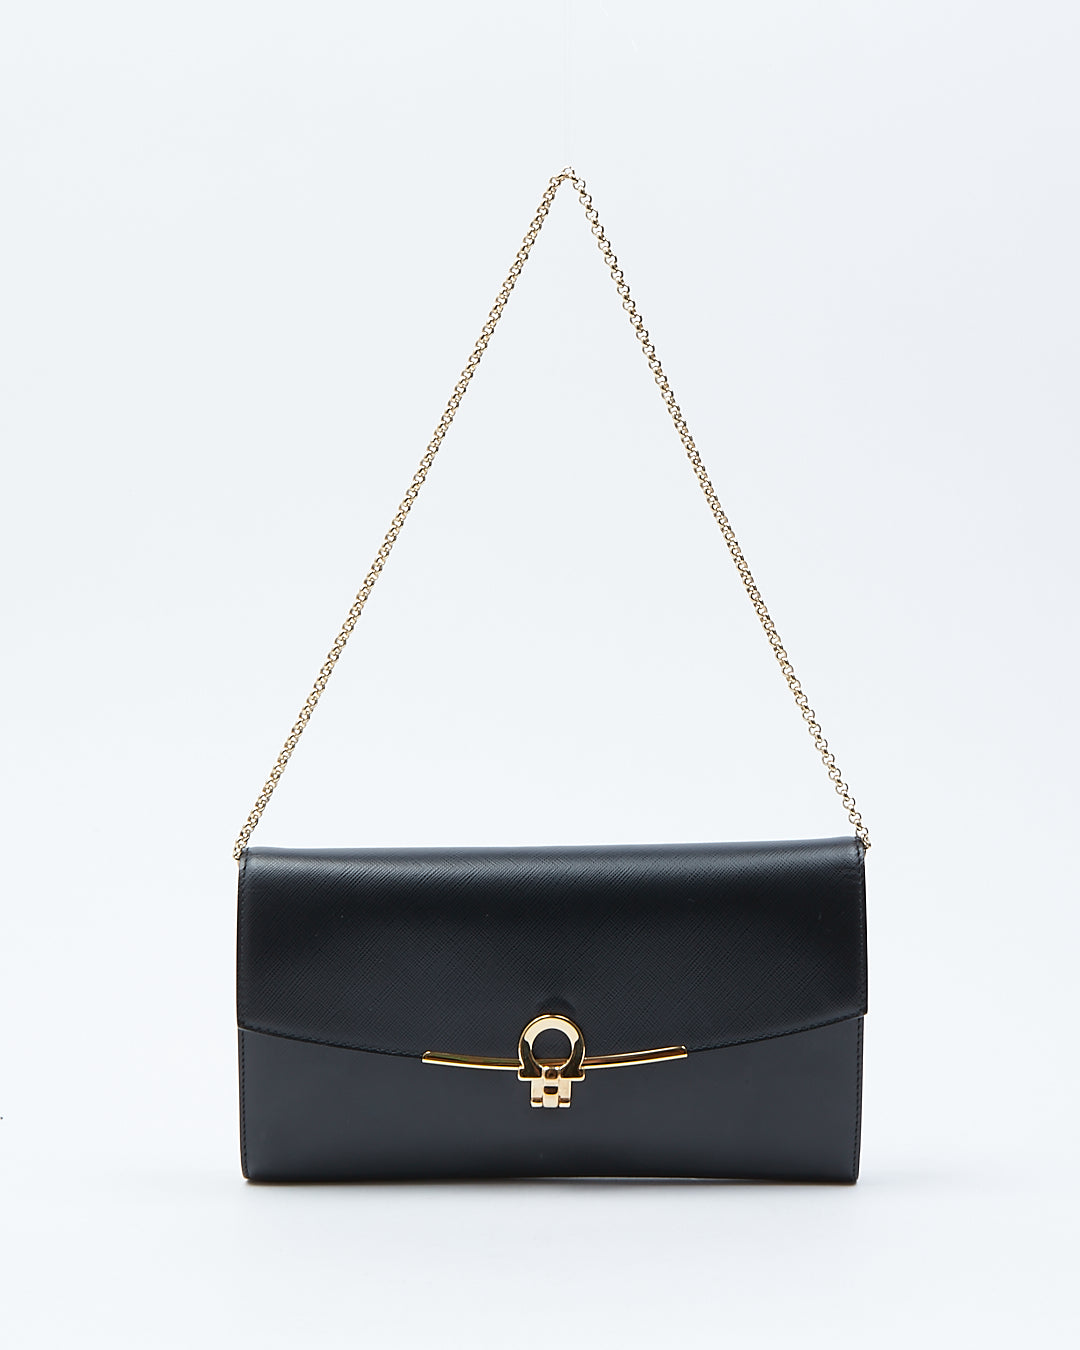 Ferragamo Black Leather Flap Wallet On Chain Shoulder Bag